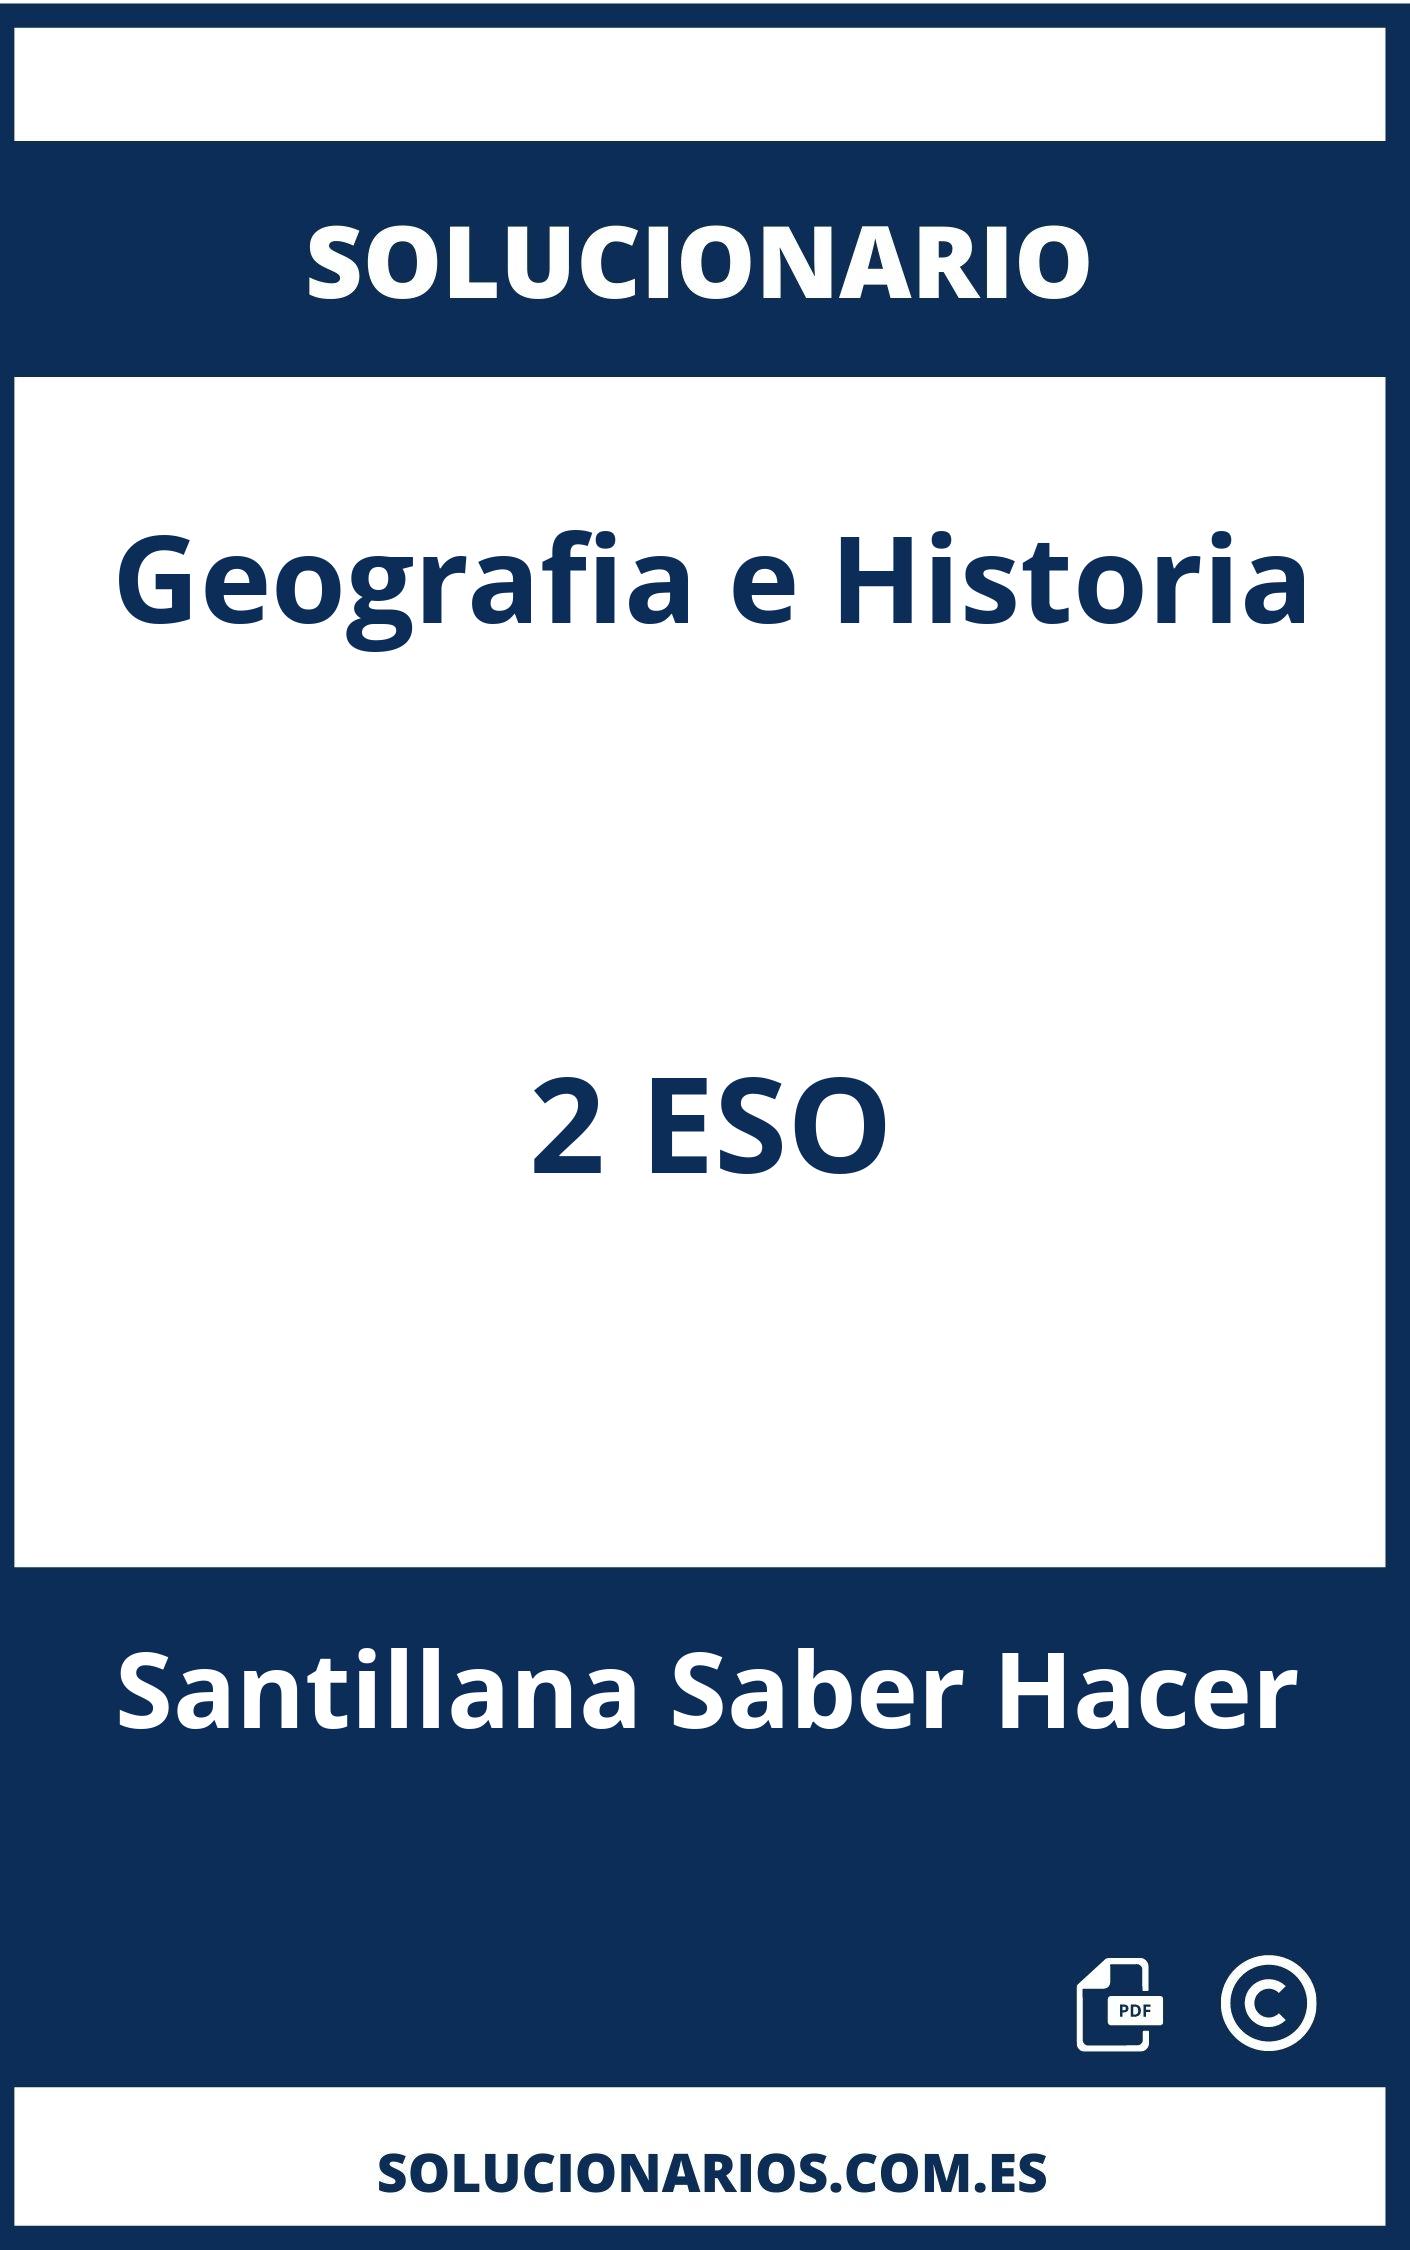 Solucionario Geografia e Historia 2 ESO Santillana Saber Hacer